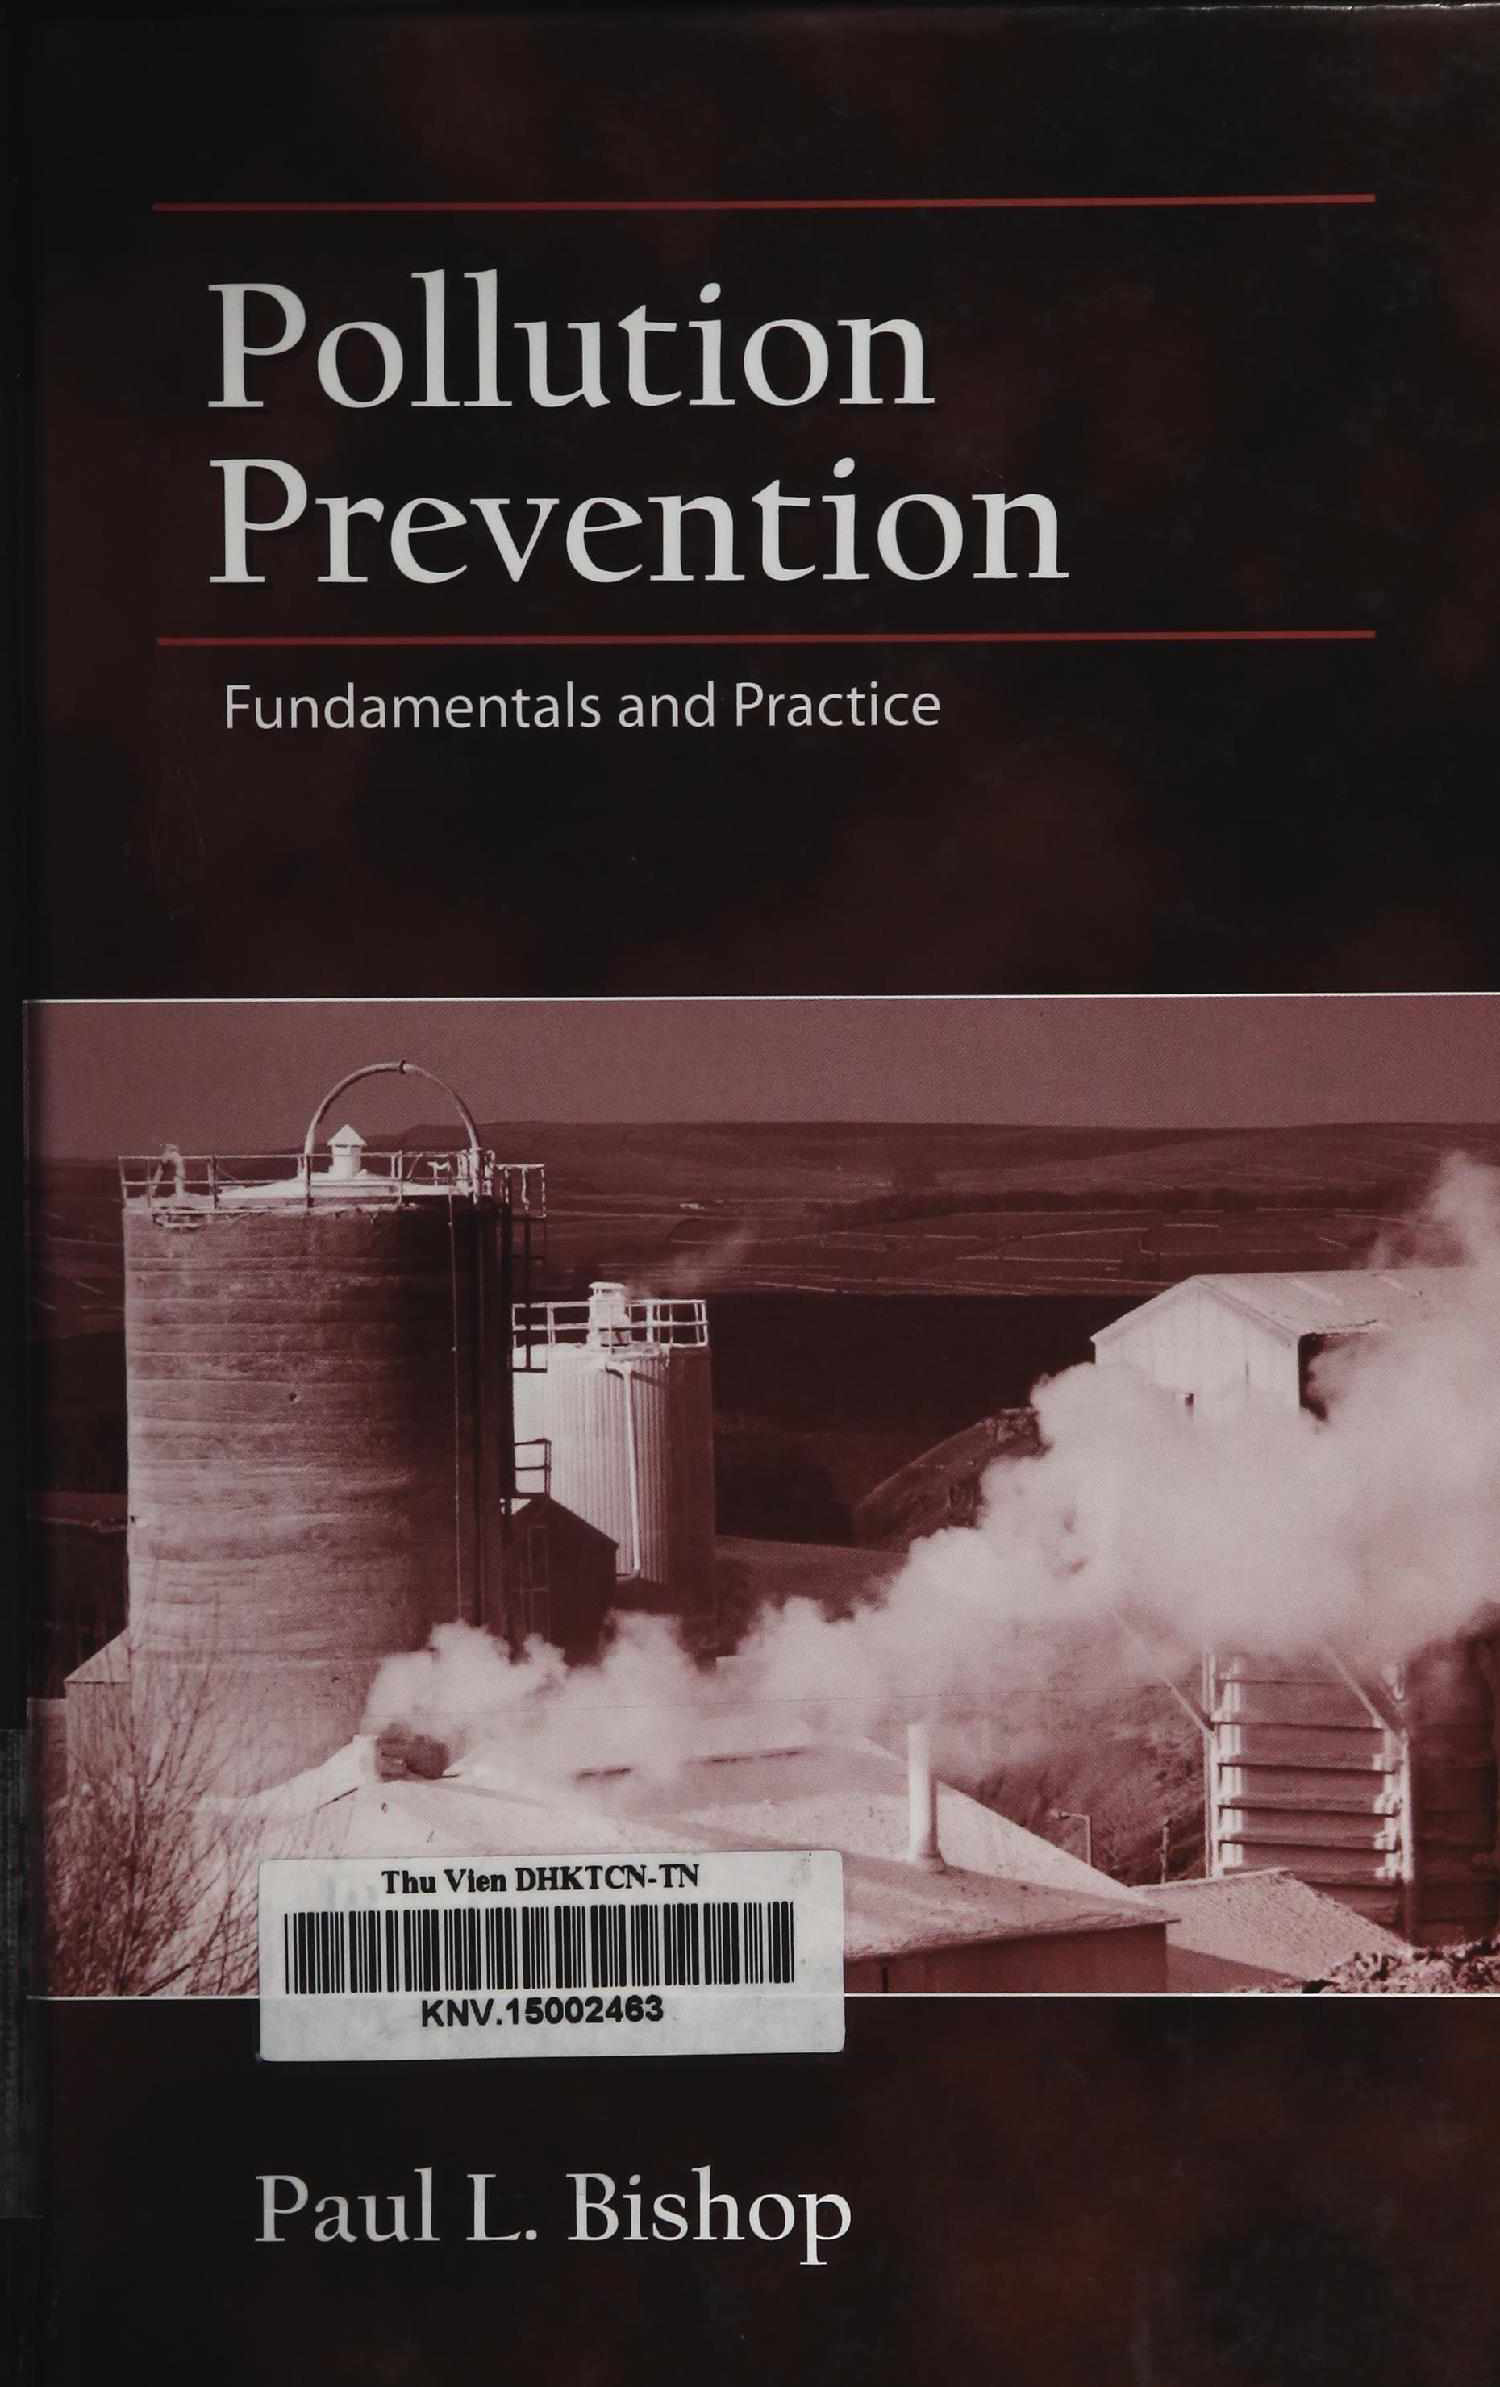 Pollution prevention